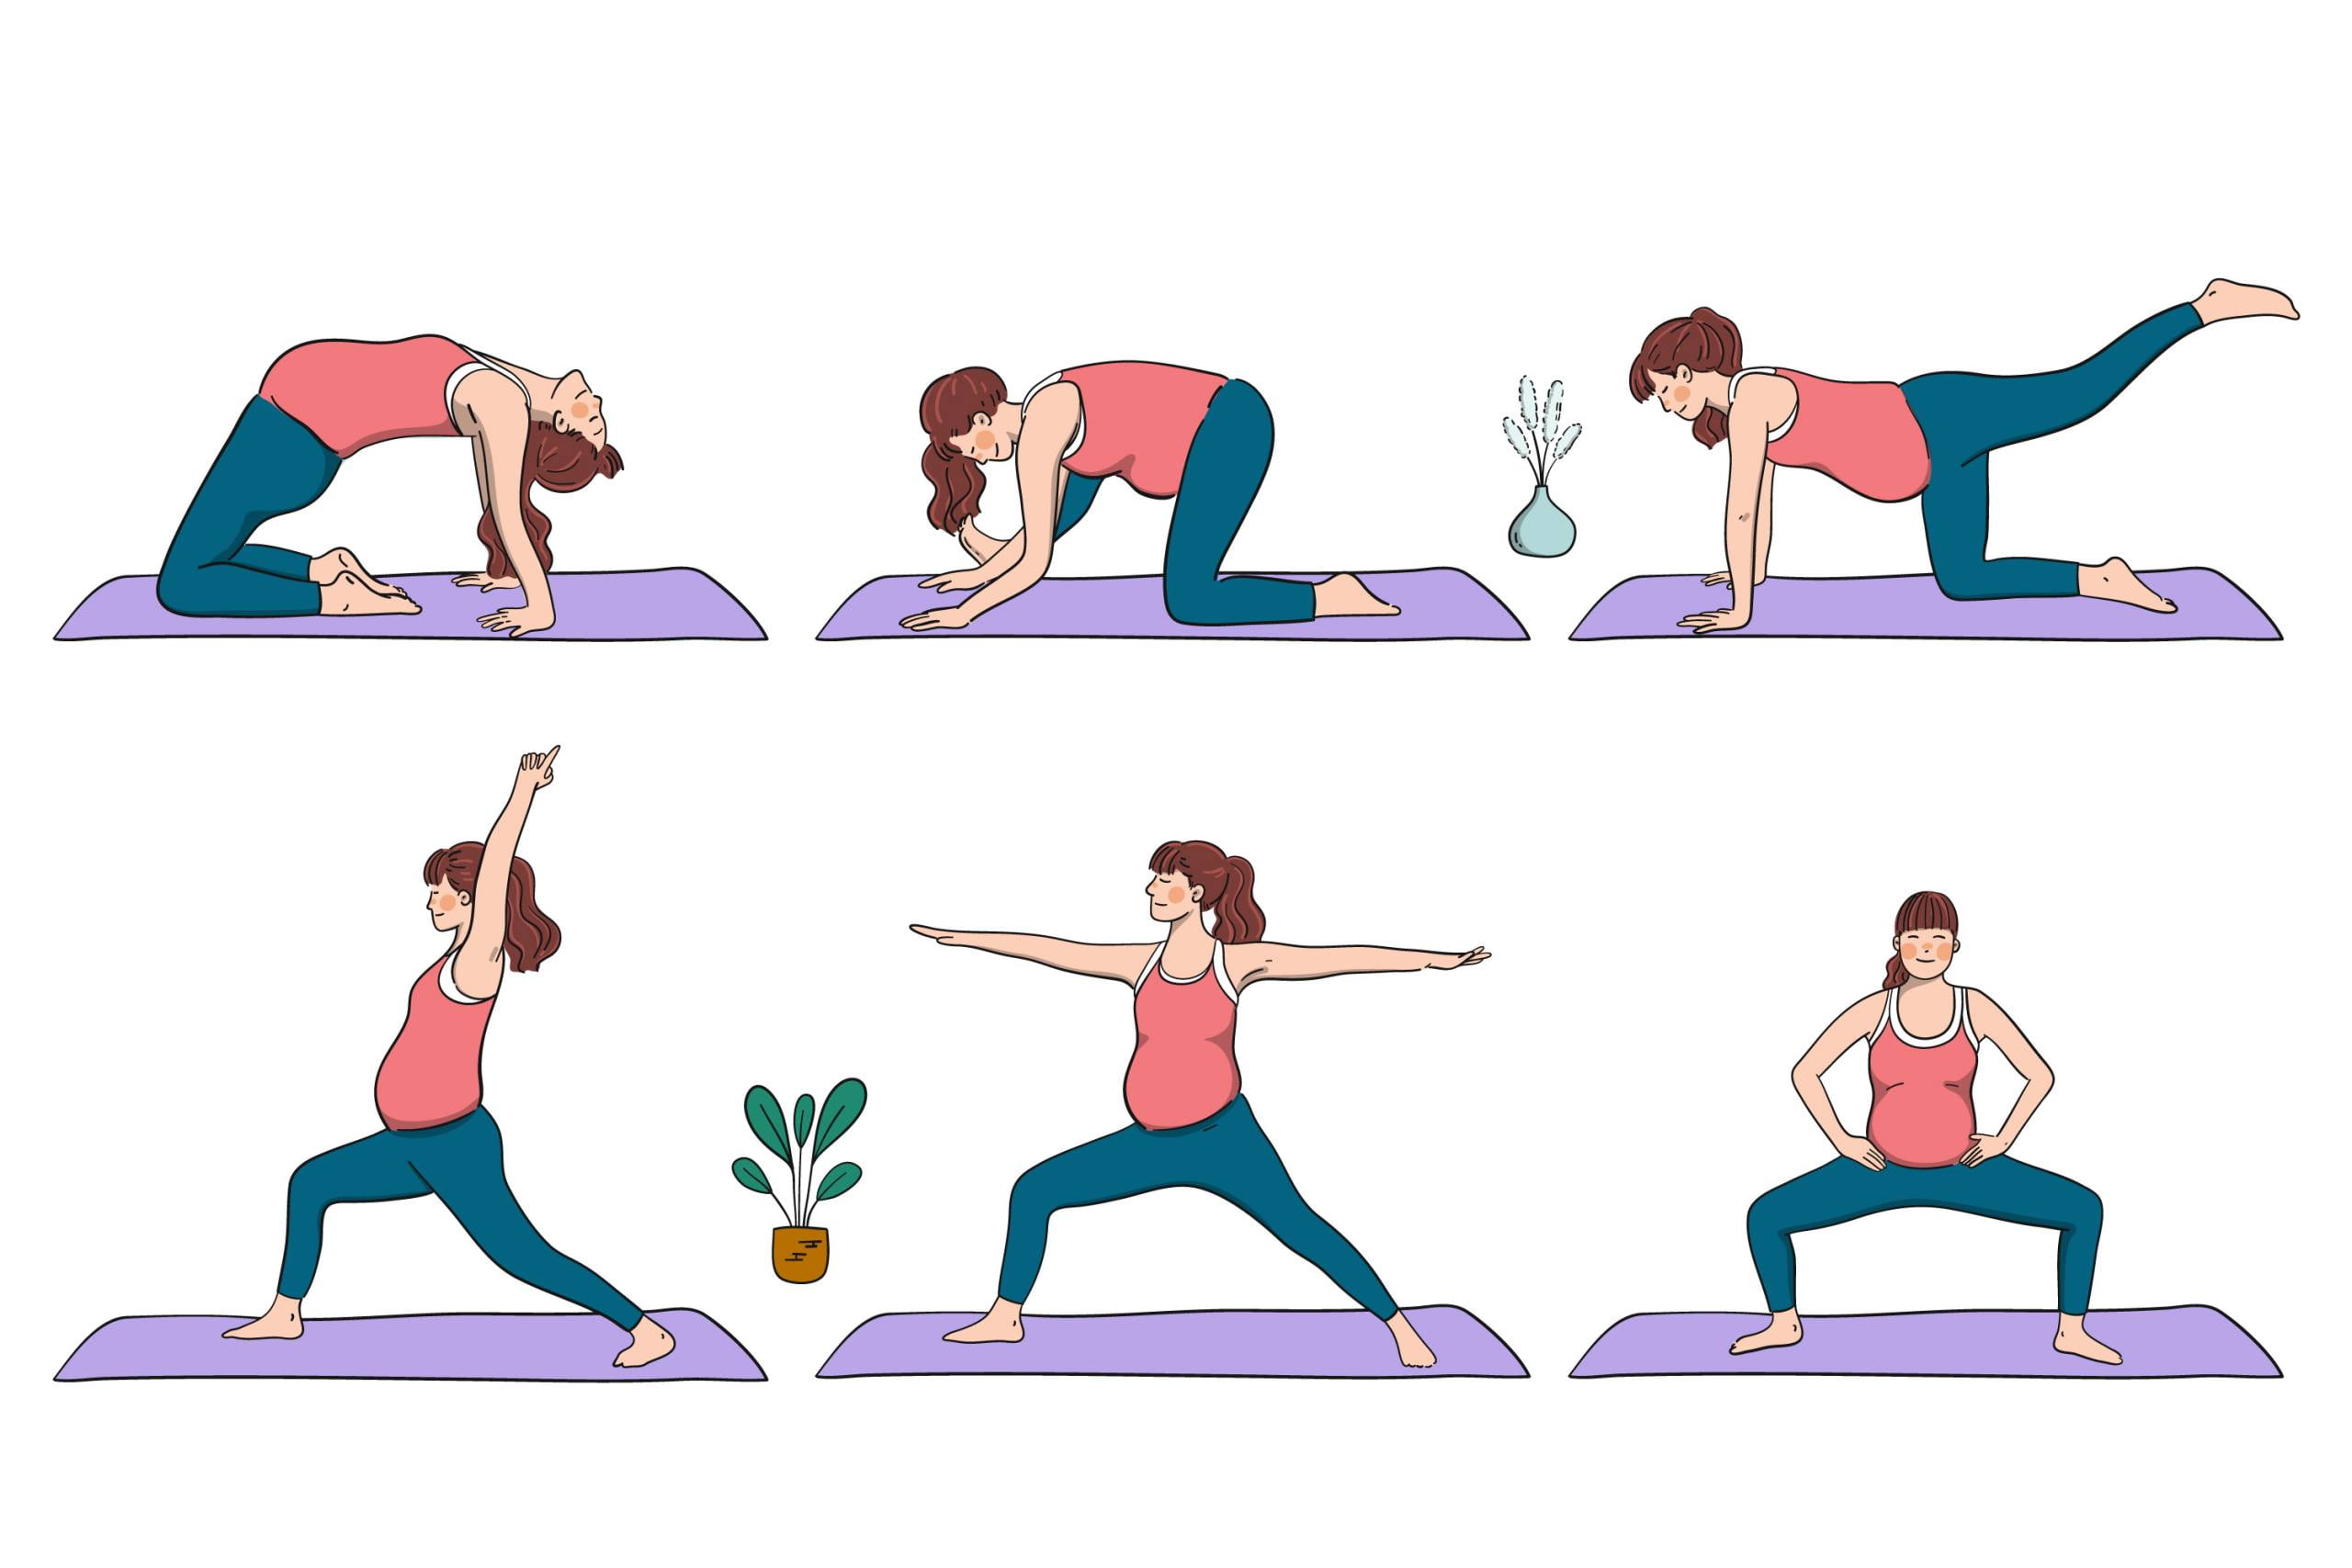 Benefits of Yoga Asanas